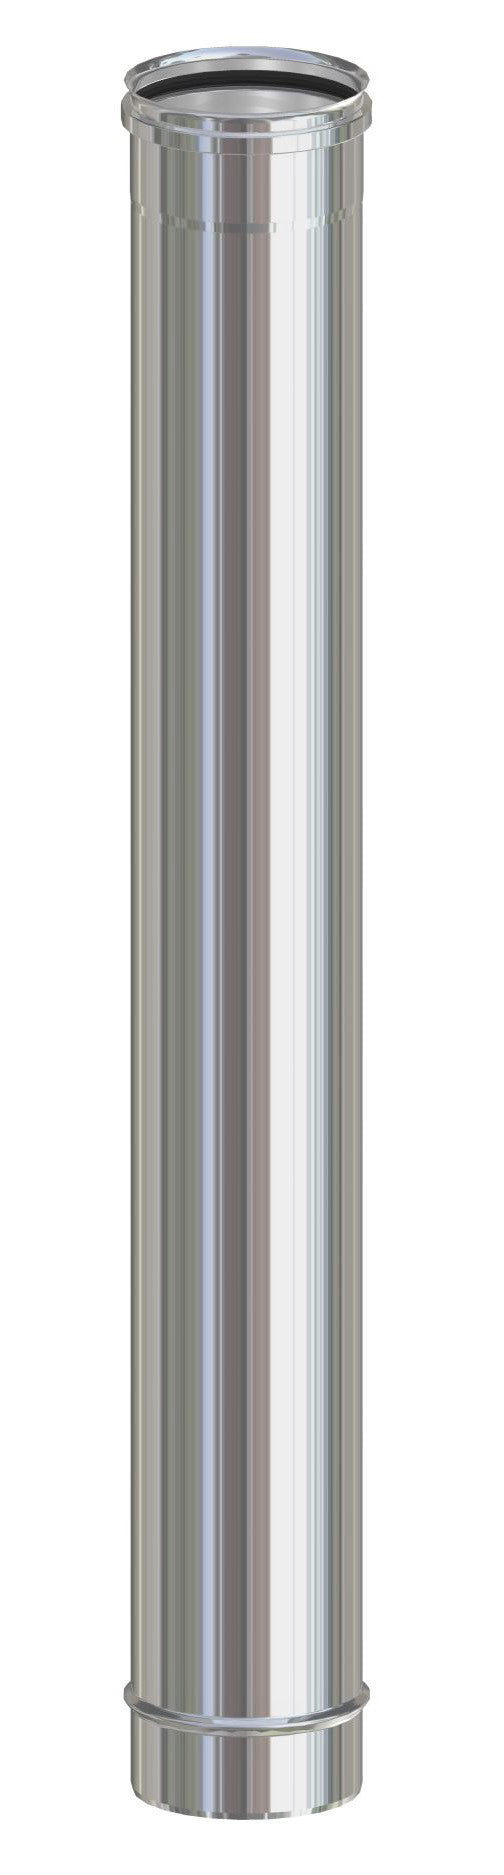 Tubo inox aisi 304 cm.100 d. 80  x pellet